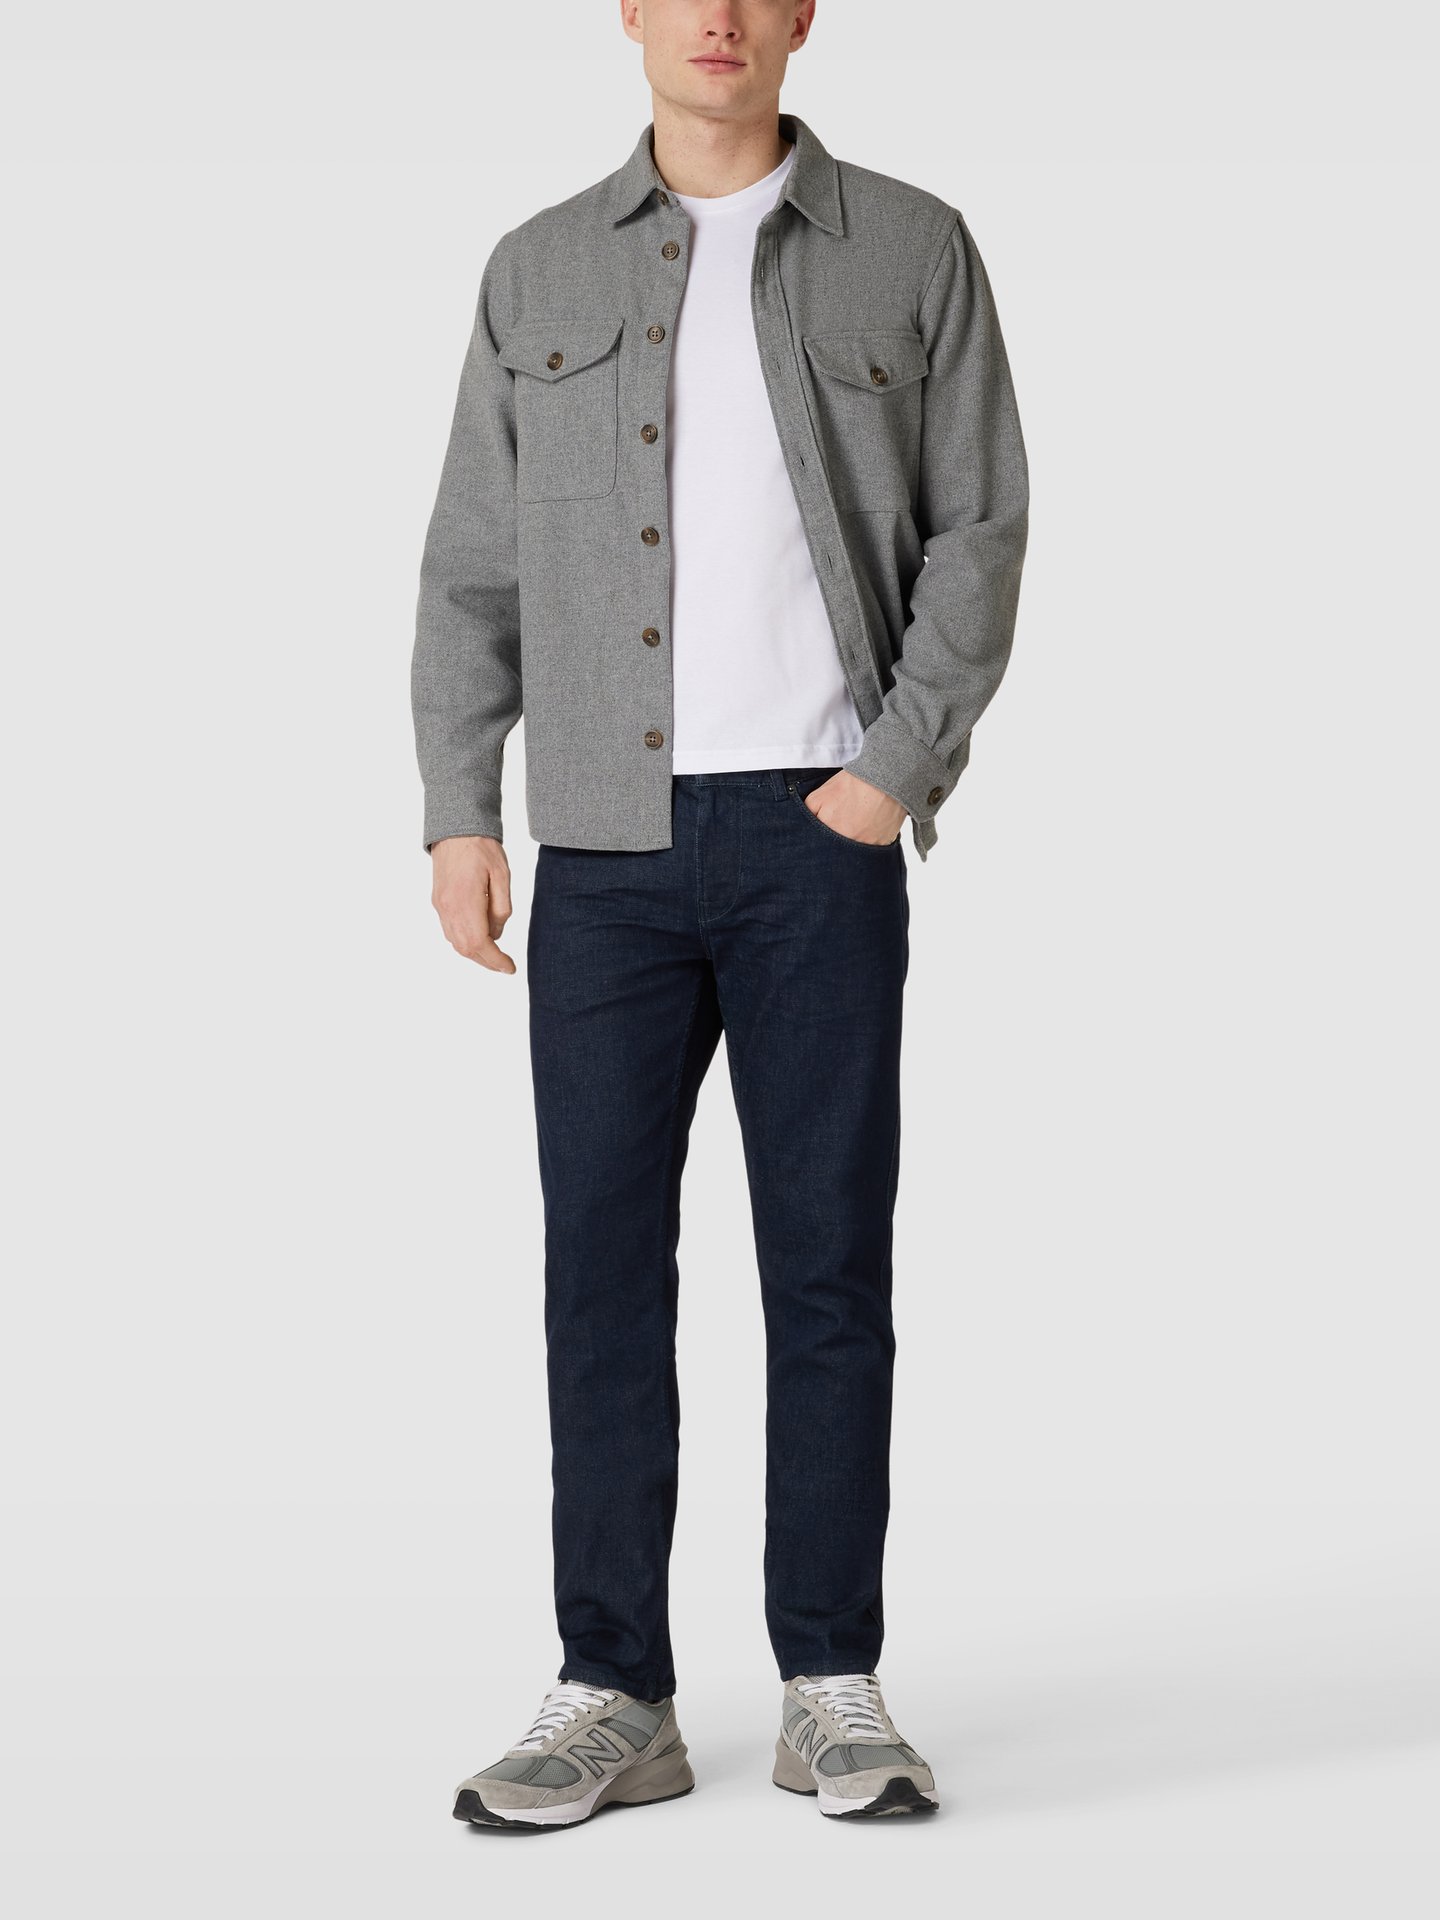 Postcode In zoomen werk Pme Legend (Pall Mall) Jeans met labeldetail, model 'Nightflight JE' in  donkerblauw online kopen | P&C